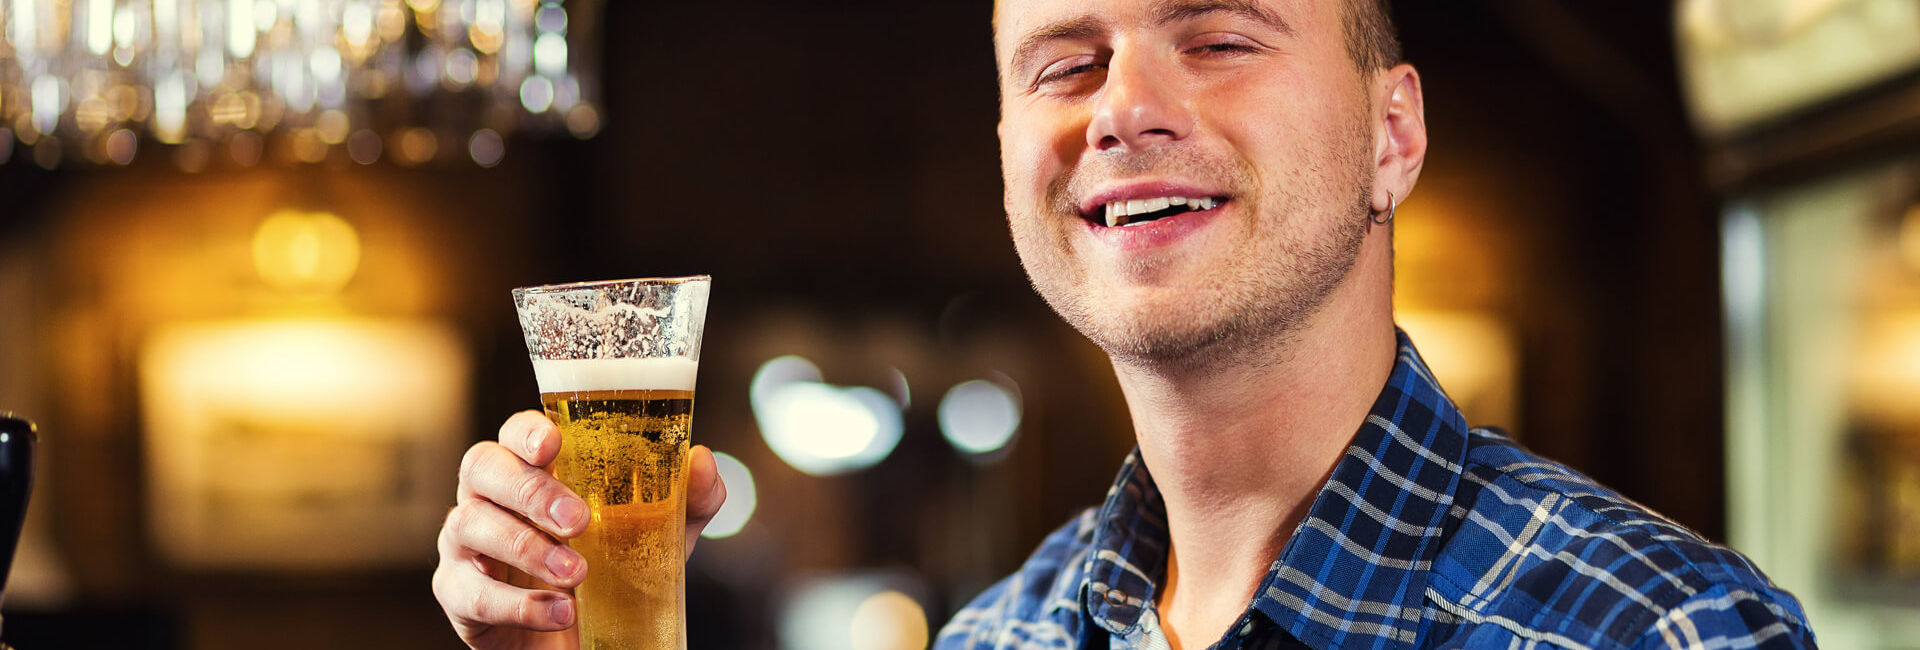 Man enjoys the beer he tapped himself - Pub Games - Gasterij 't Karrewiel